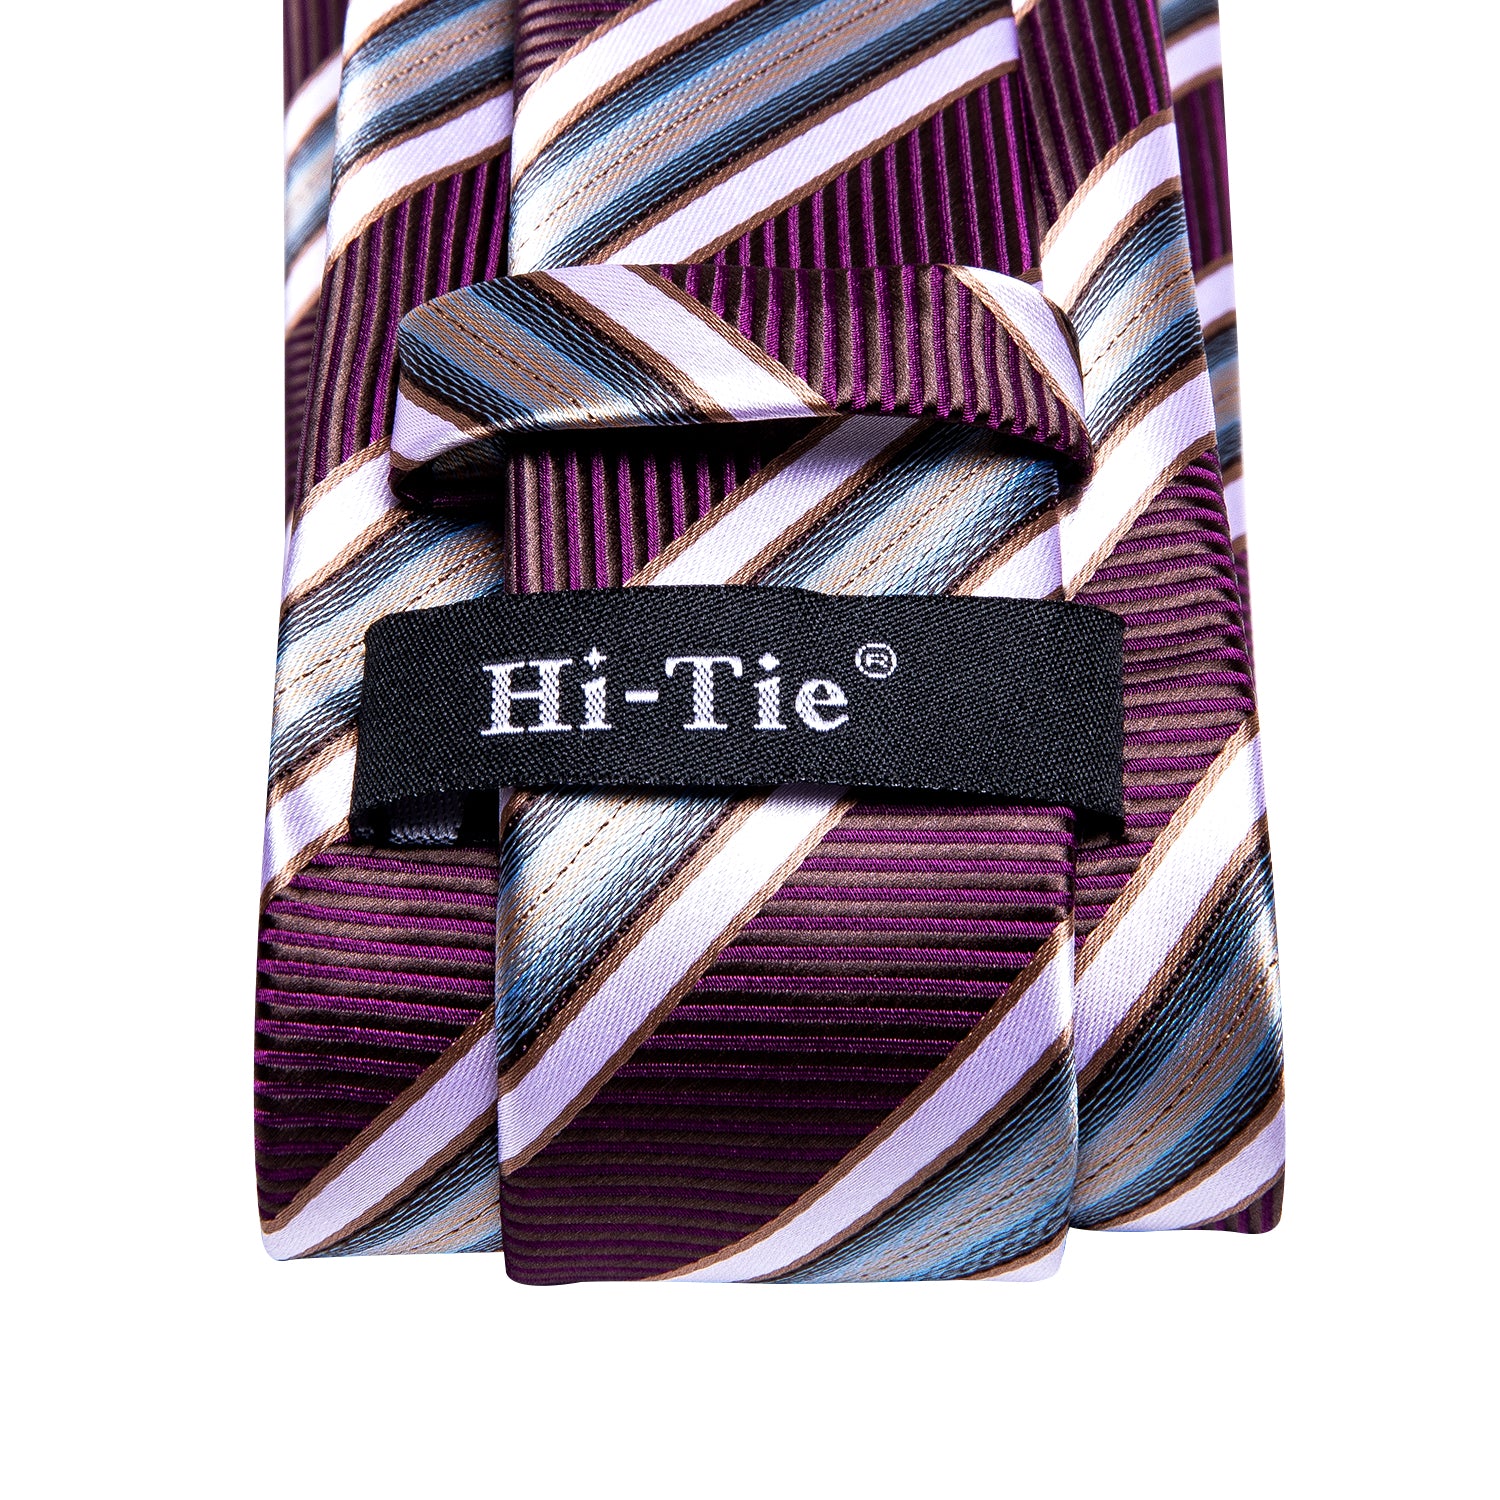 Burgundy White Striped Tie Pocket Square Cufflinks Set